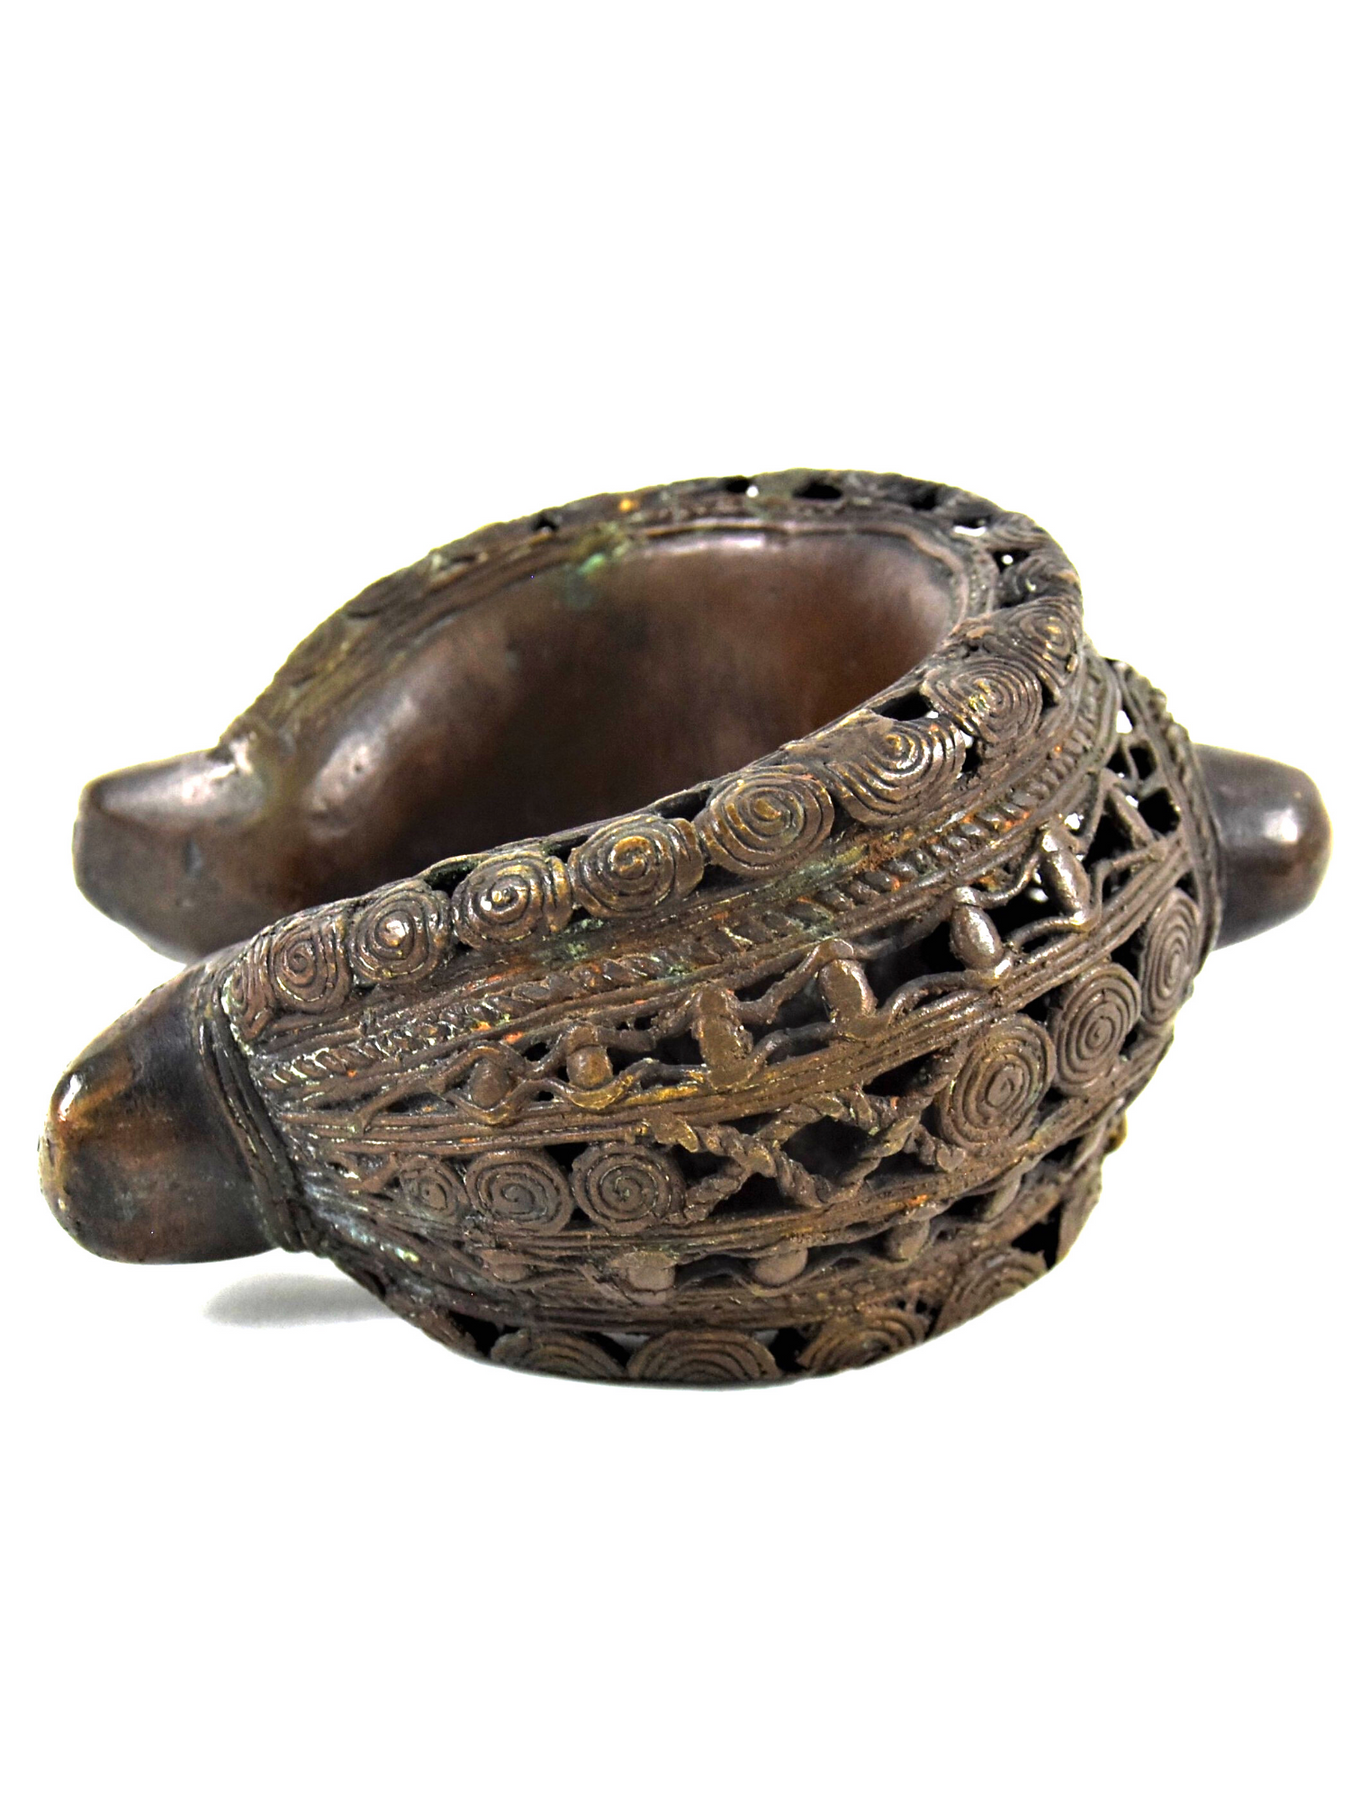 Bracelet with animal terminals | Iran | Iron Age III | The Metropolitan  Museum of Art